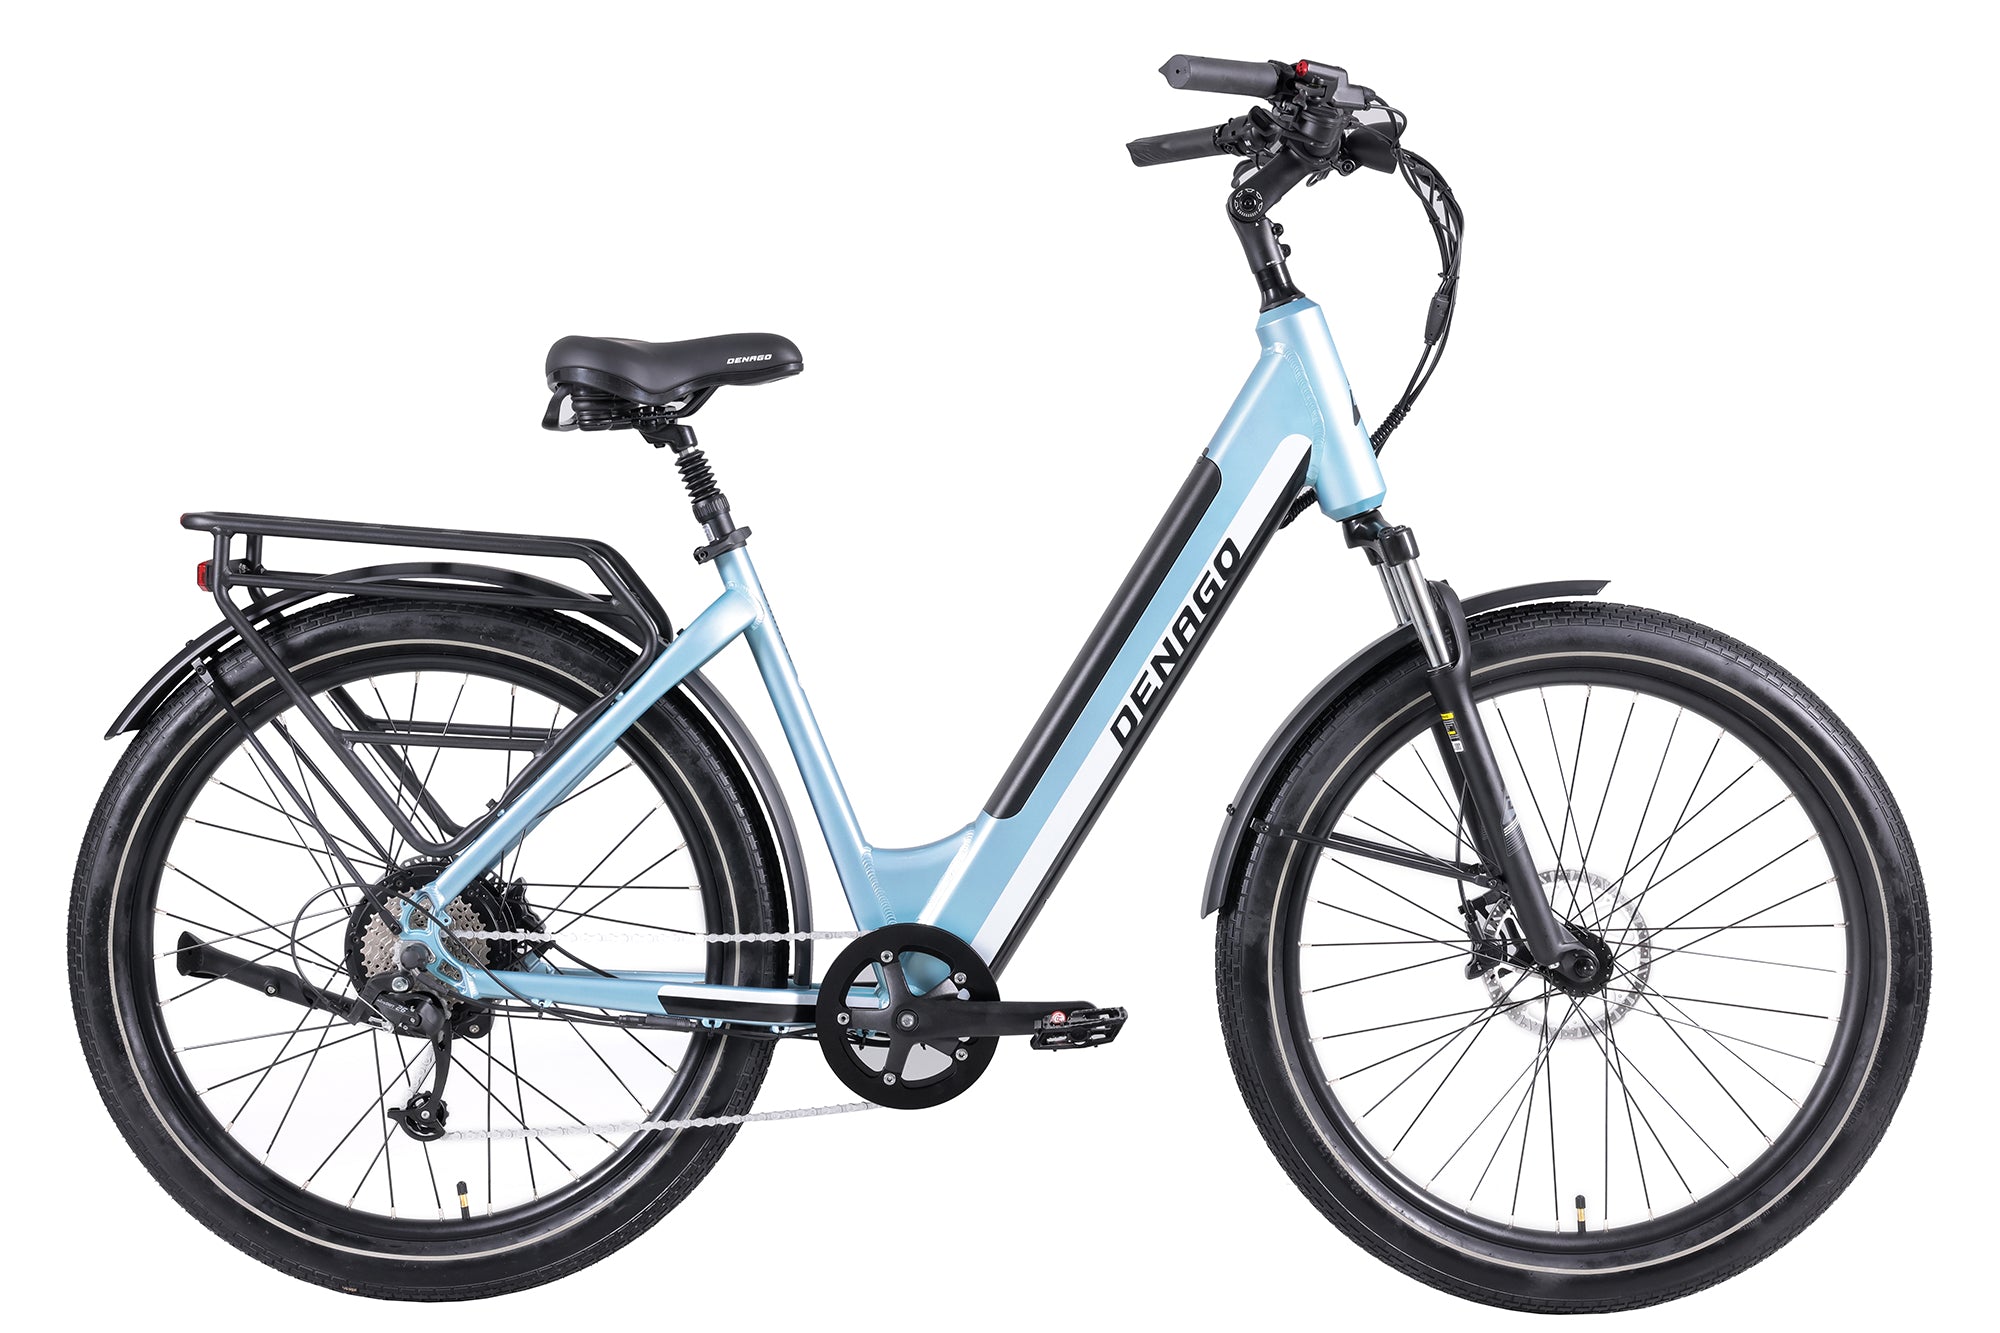 Shop All Denago eBikes, Premium Electric Bikes for Adults